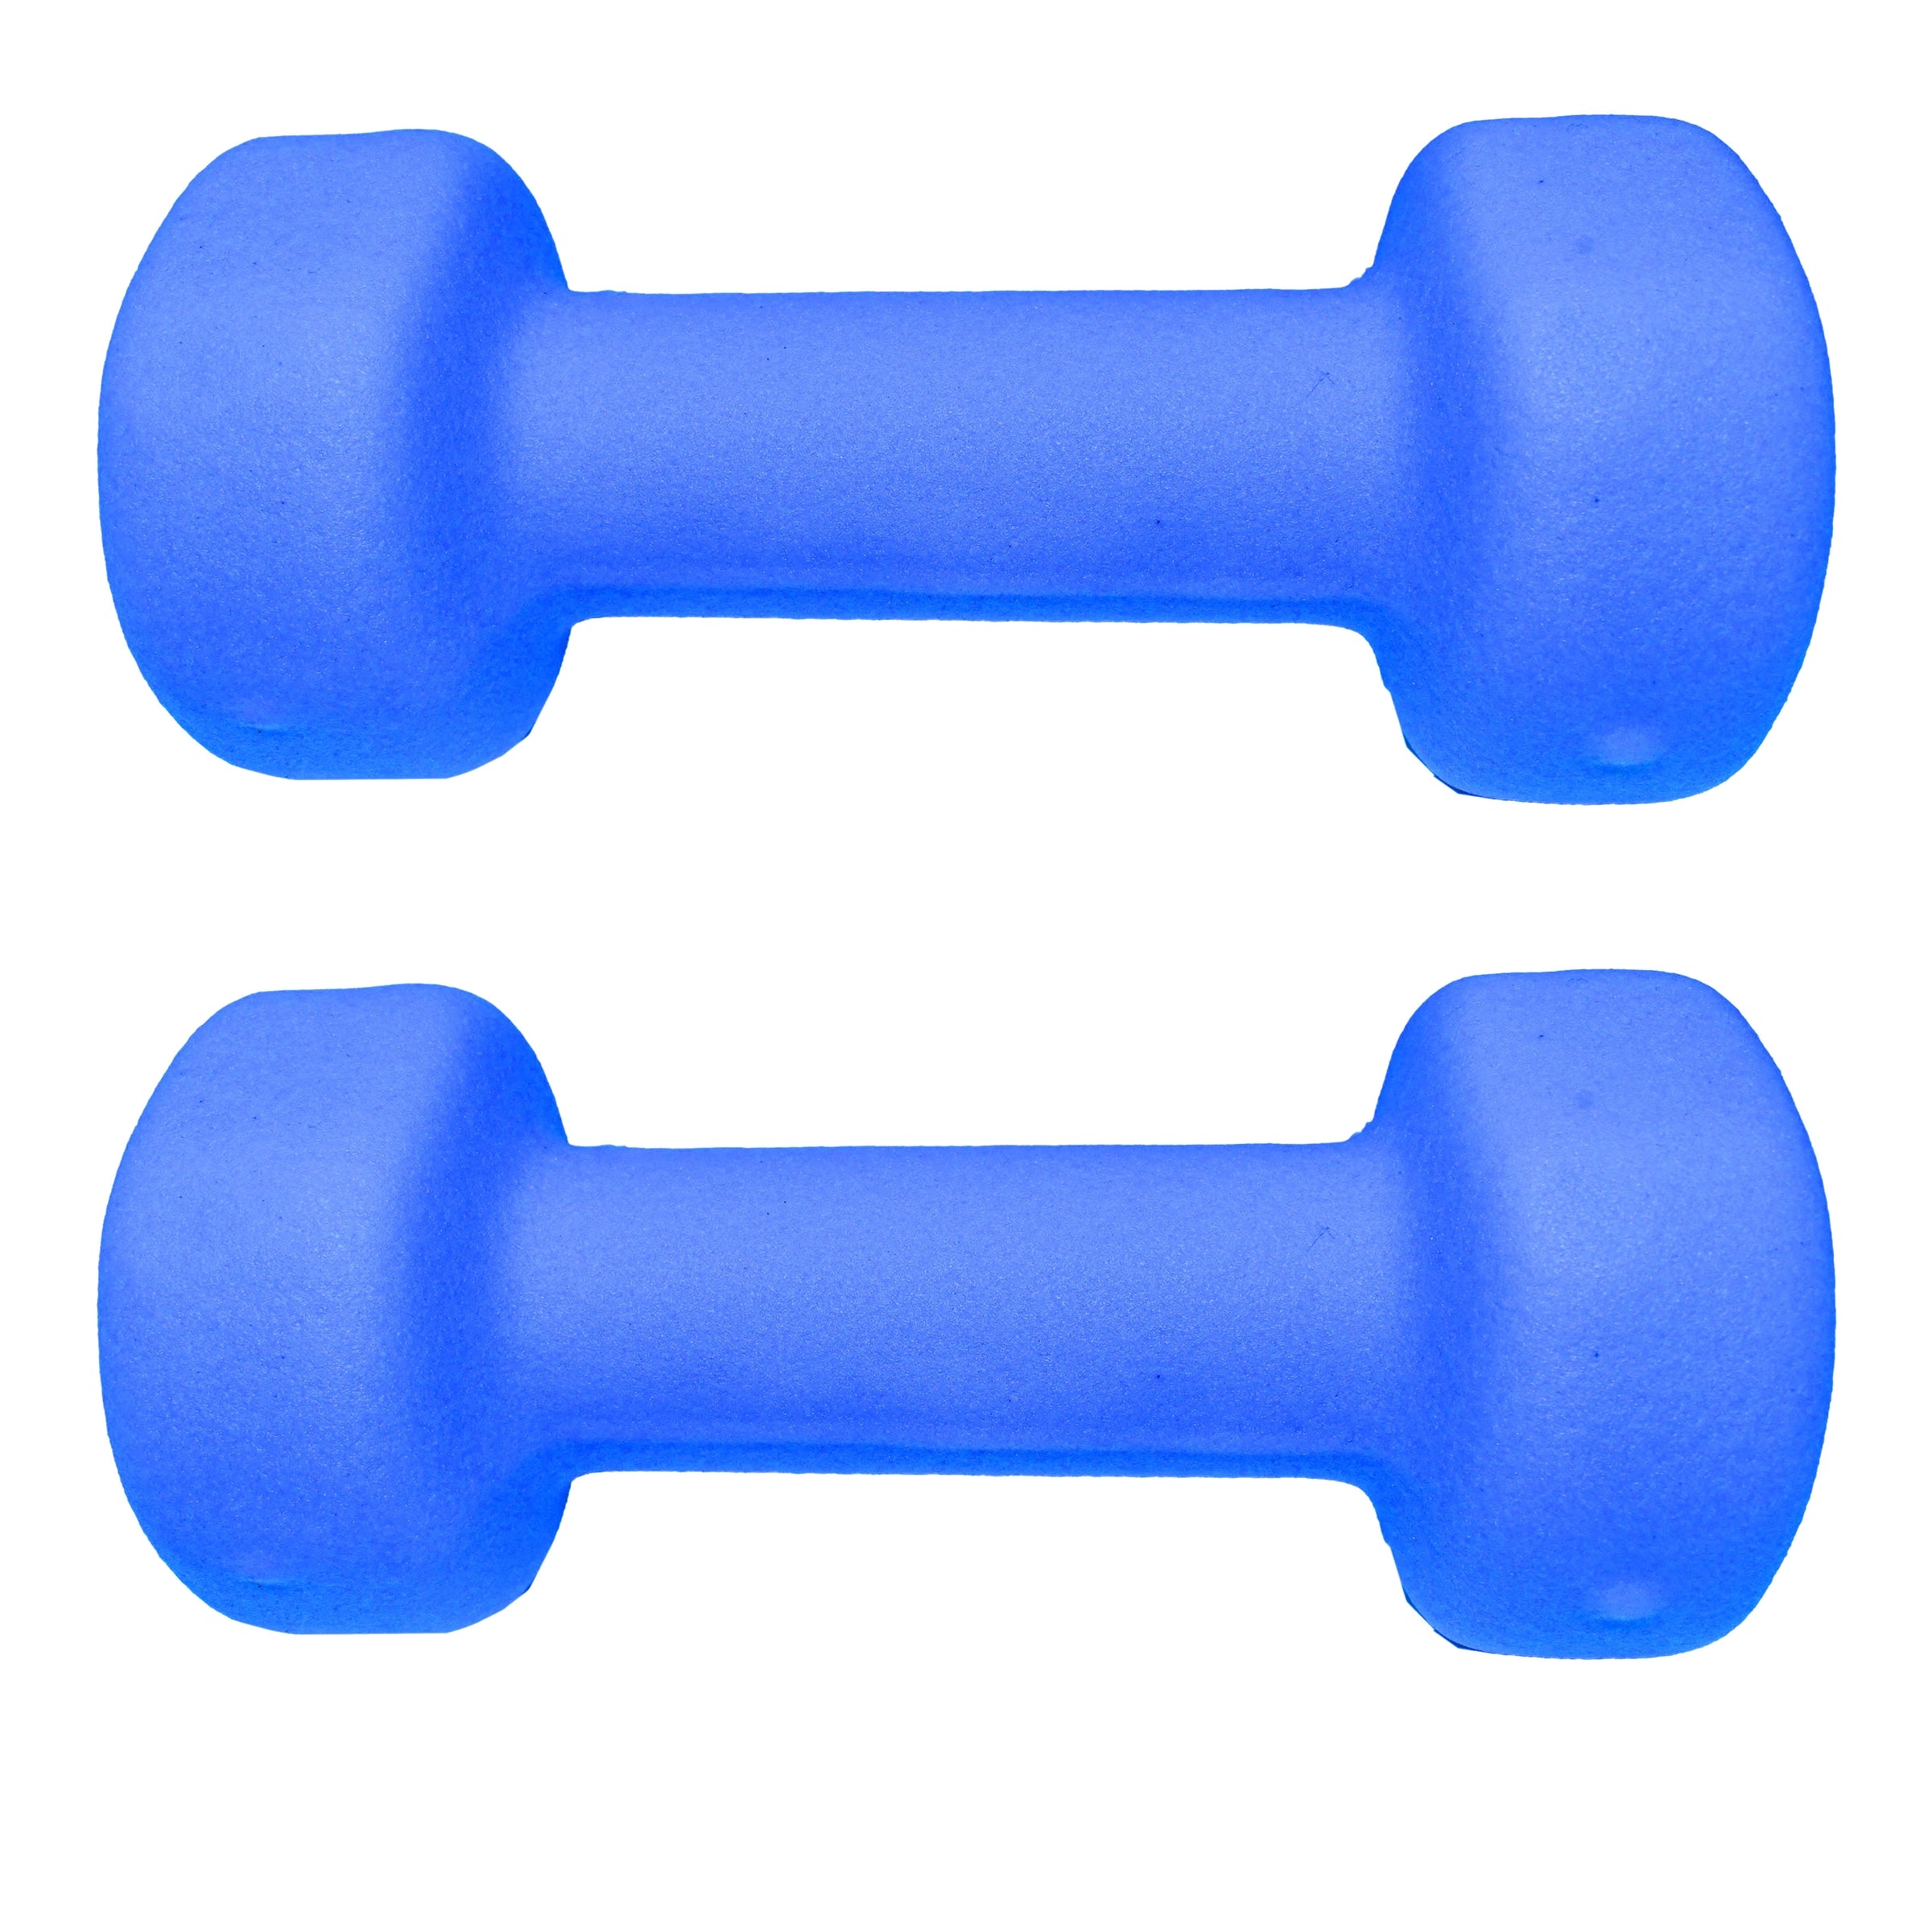 Non-Slip Hexagonal Shaped Free Weight Dumbbells Blue - Set of 2